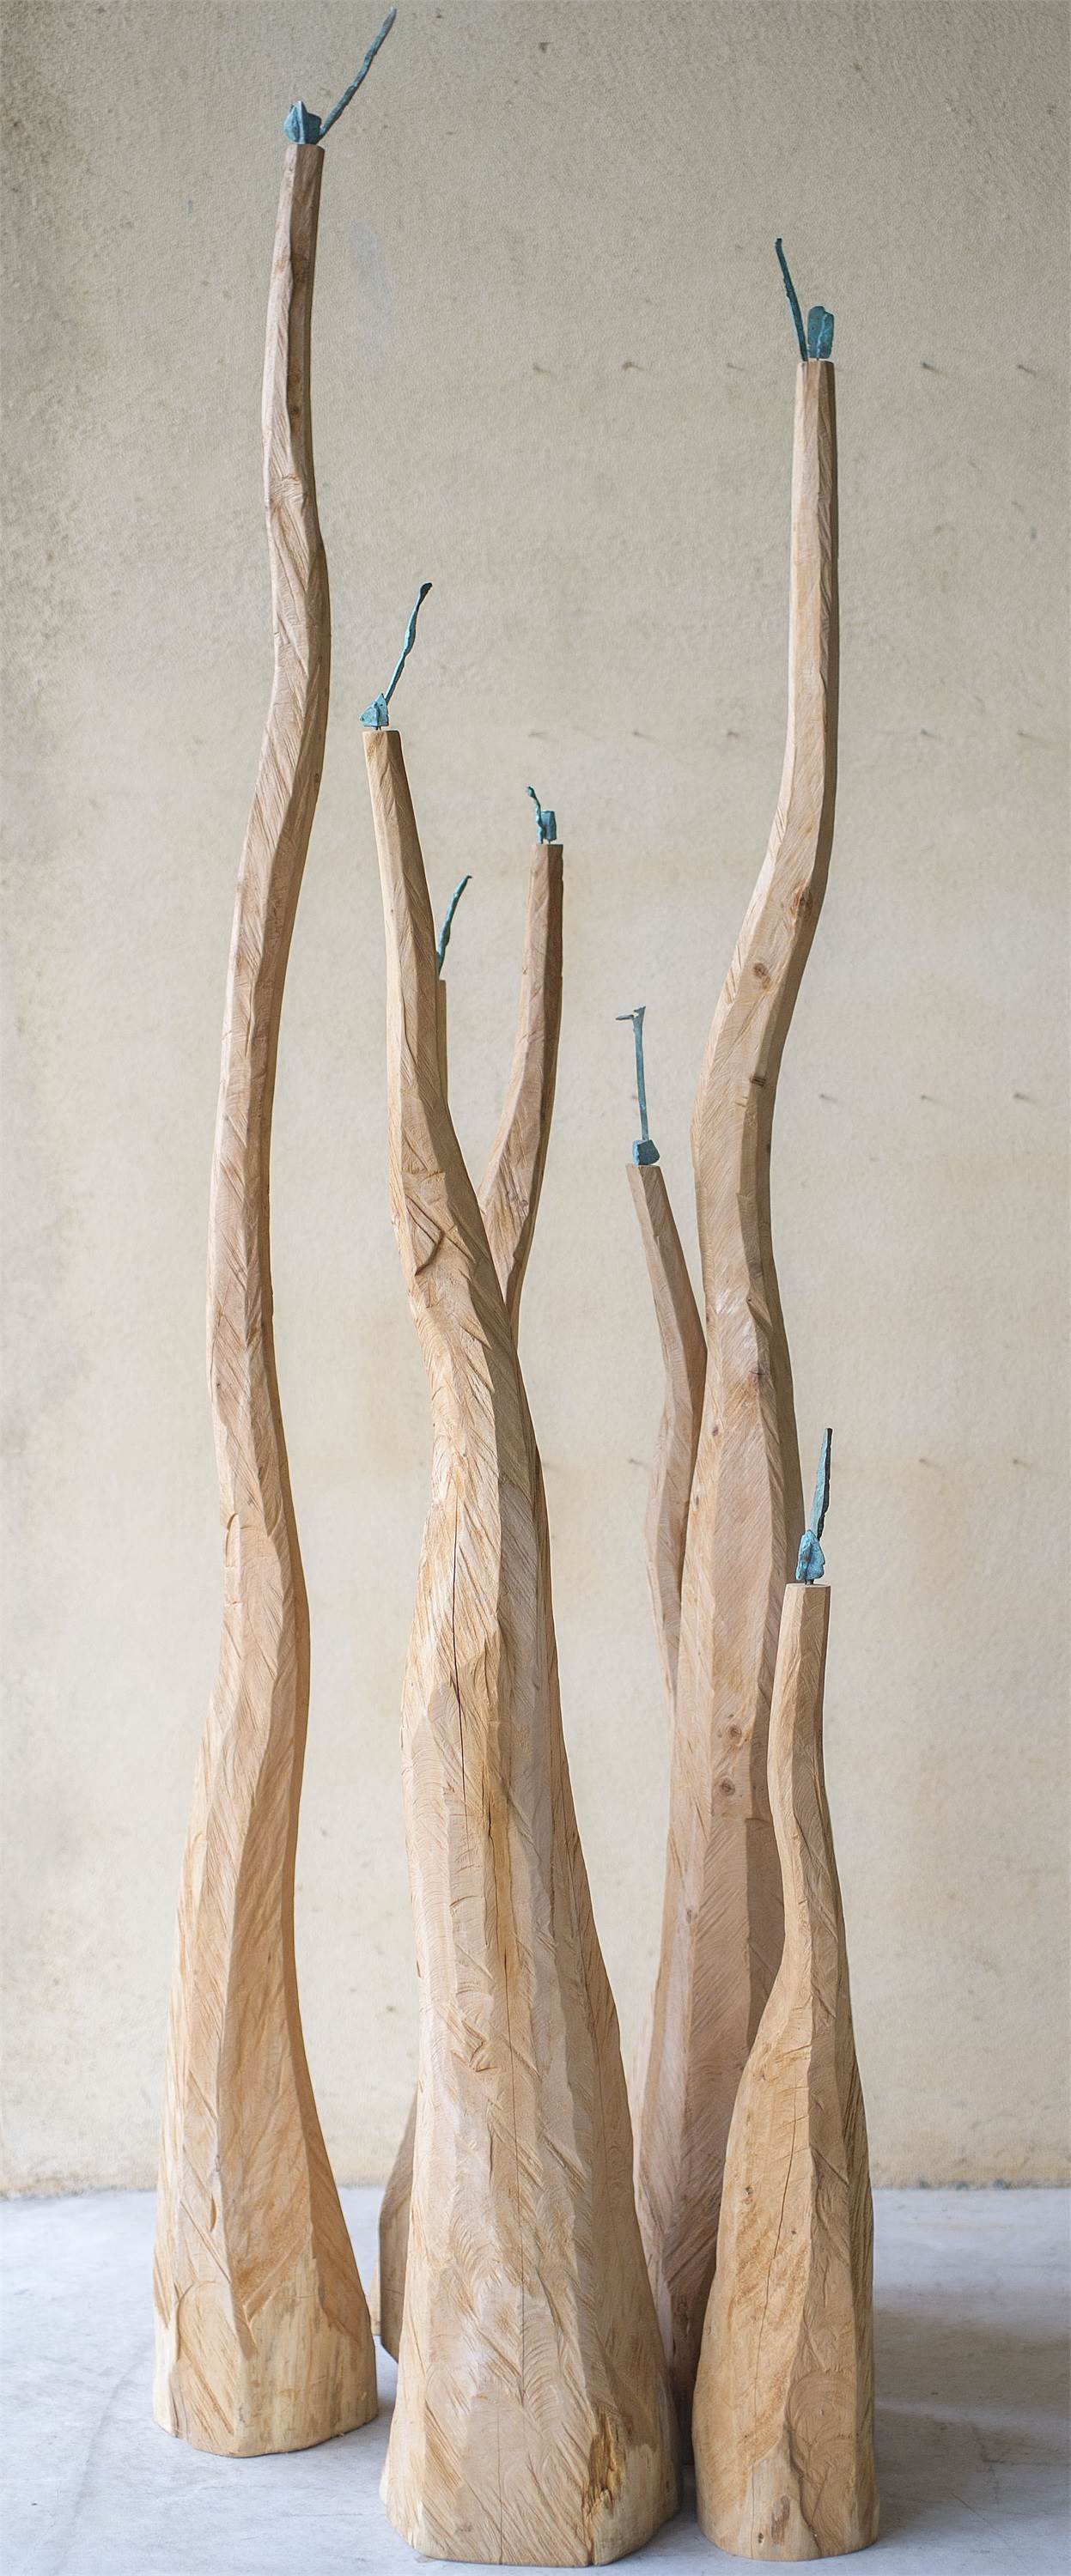 Rebentos, original Nature Wood Sculpture by Paulo Neves